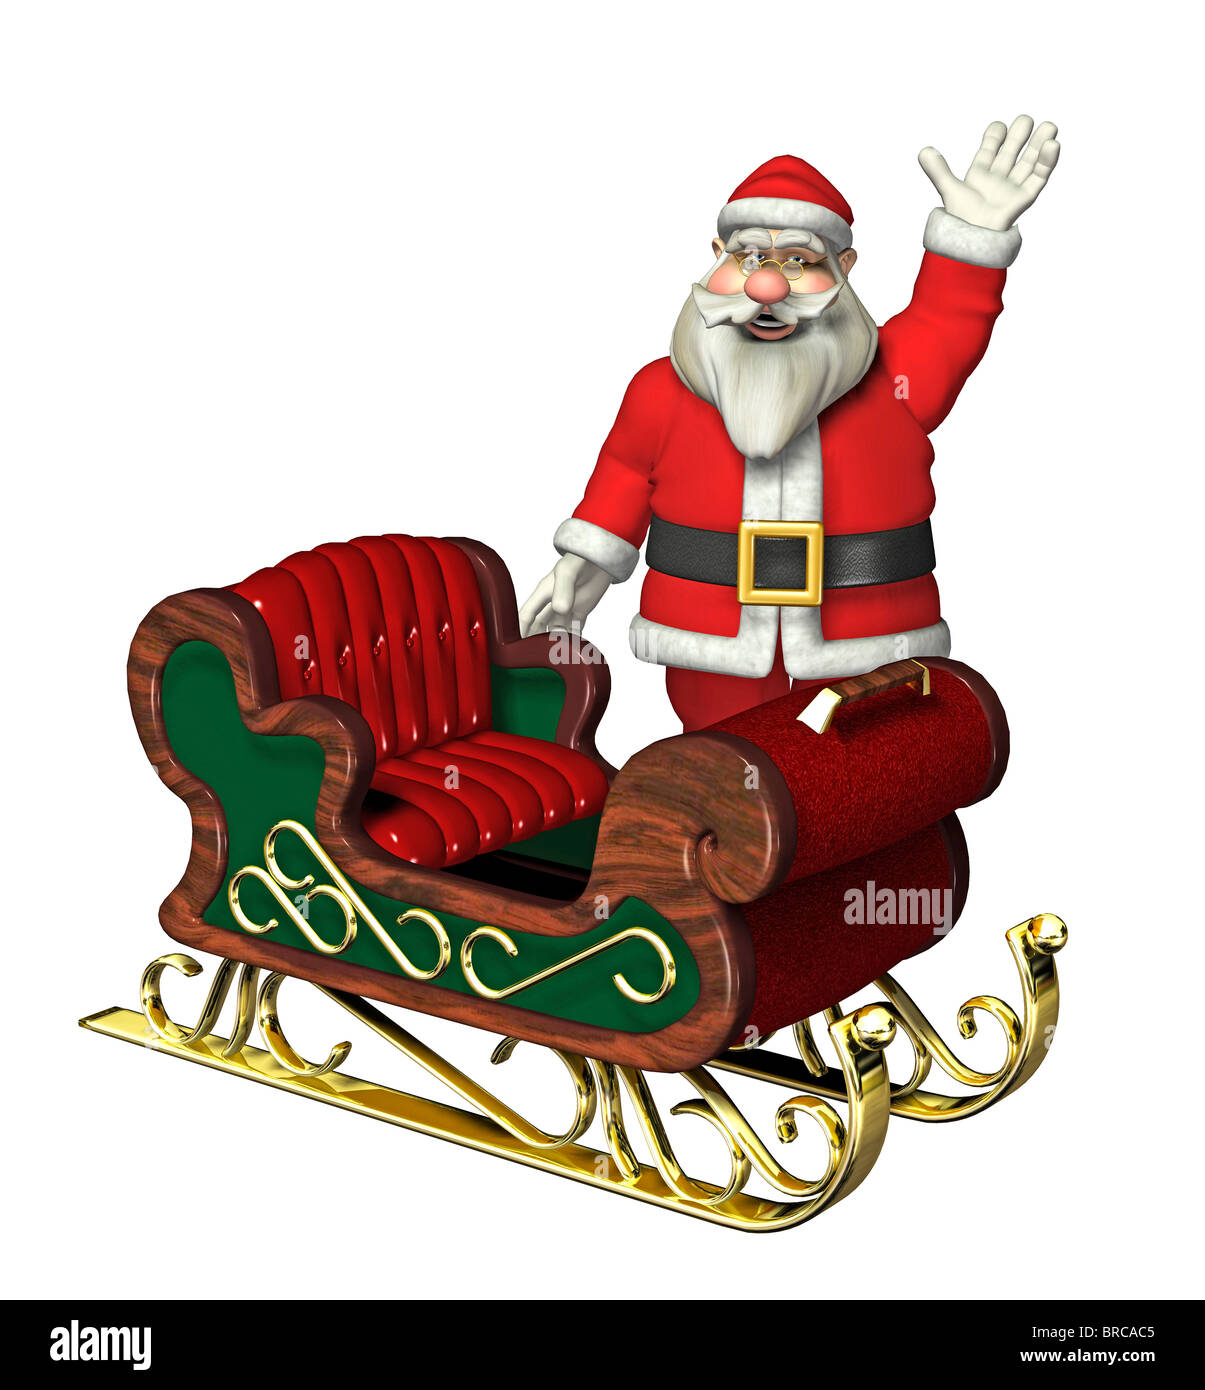 Santa Claus with reindeer sleigh Stock Photo